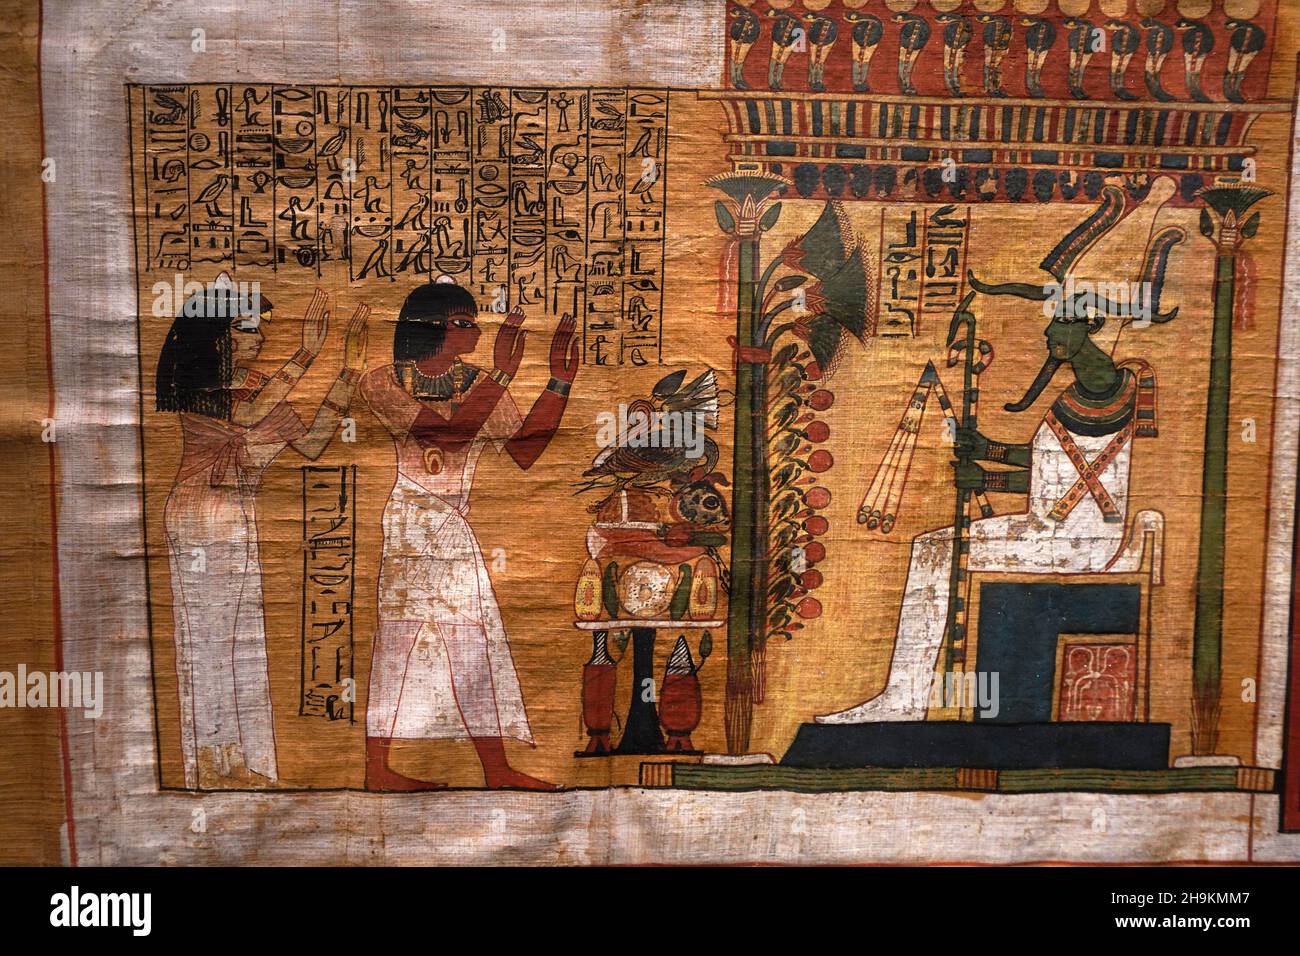 TURIN, ITALIEN - 19. AUGUST 2021: Papyrus mit Ossiris im Ägyptischen Museum von Turin, Italien Stockfoto